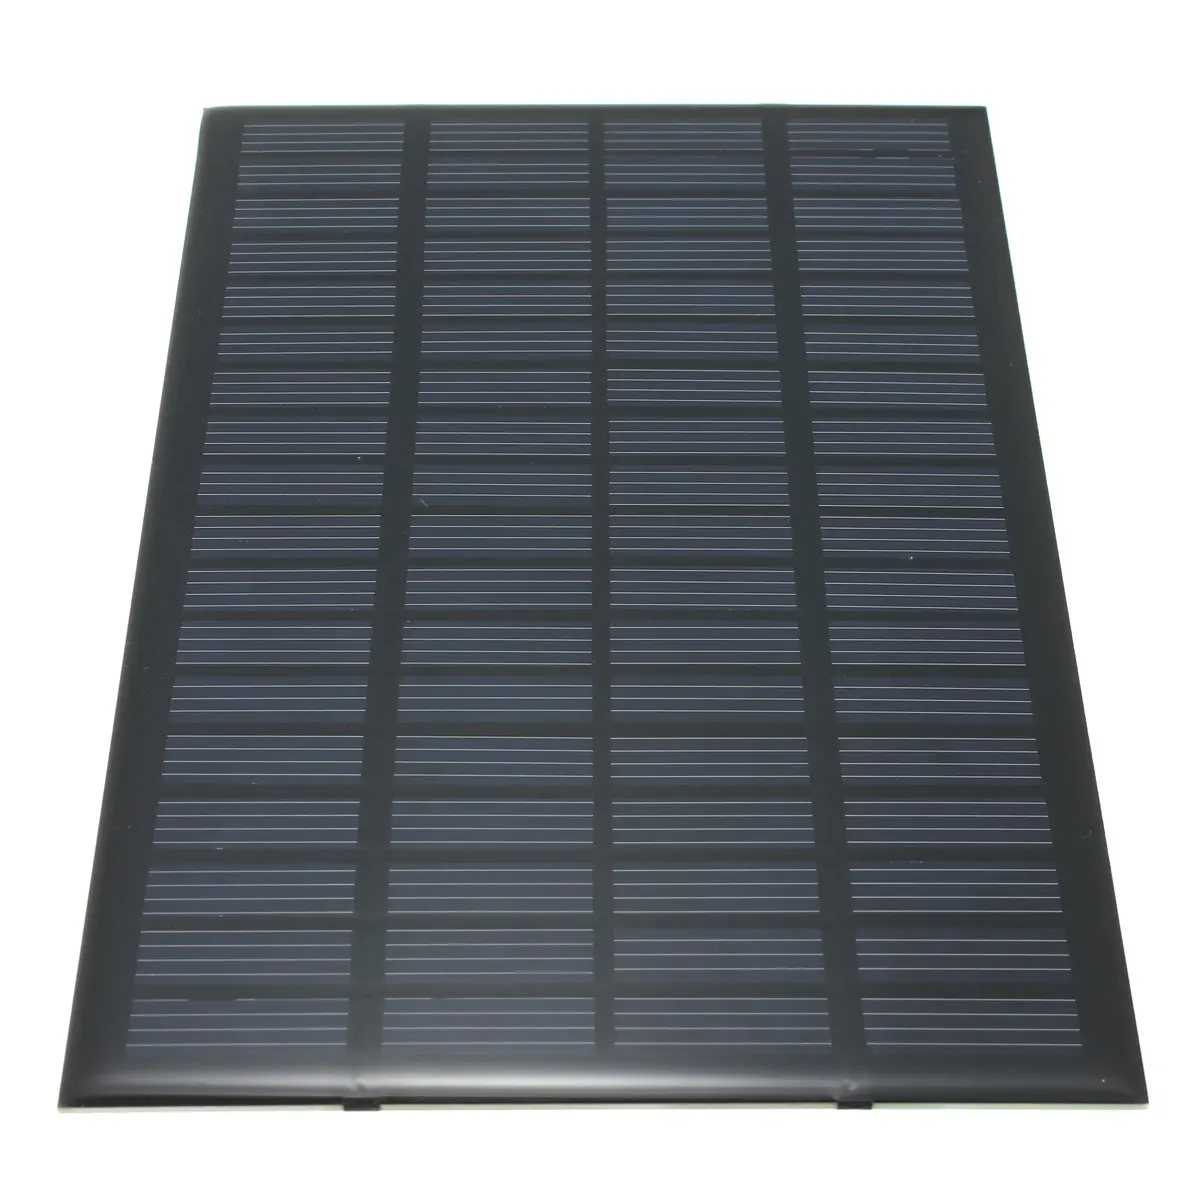 LEORY 18V 2.5 W Polycrystalline Stored Energy Power Solar Panel Модулна Система Solar Cells Charger 19. 4x12x0.3cm